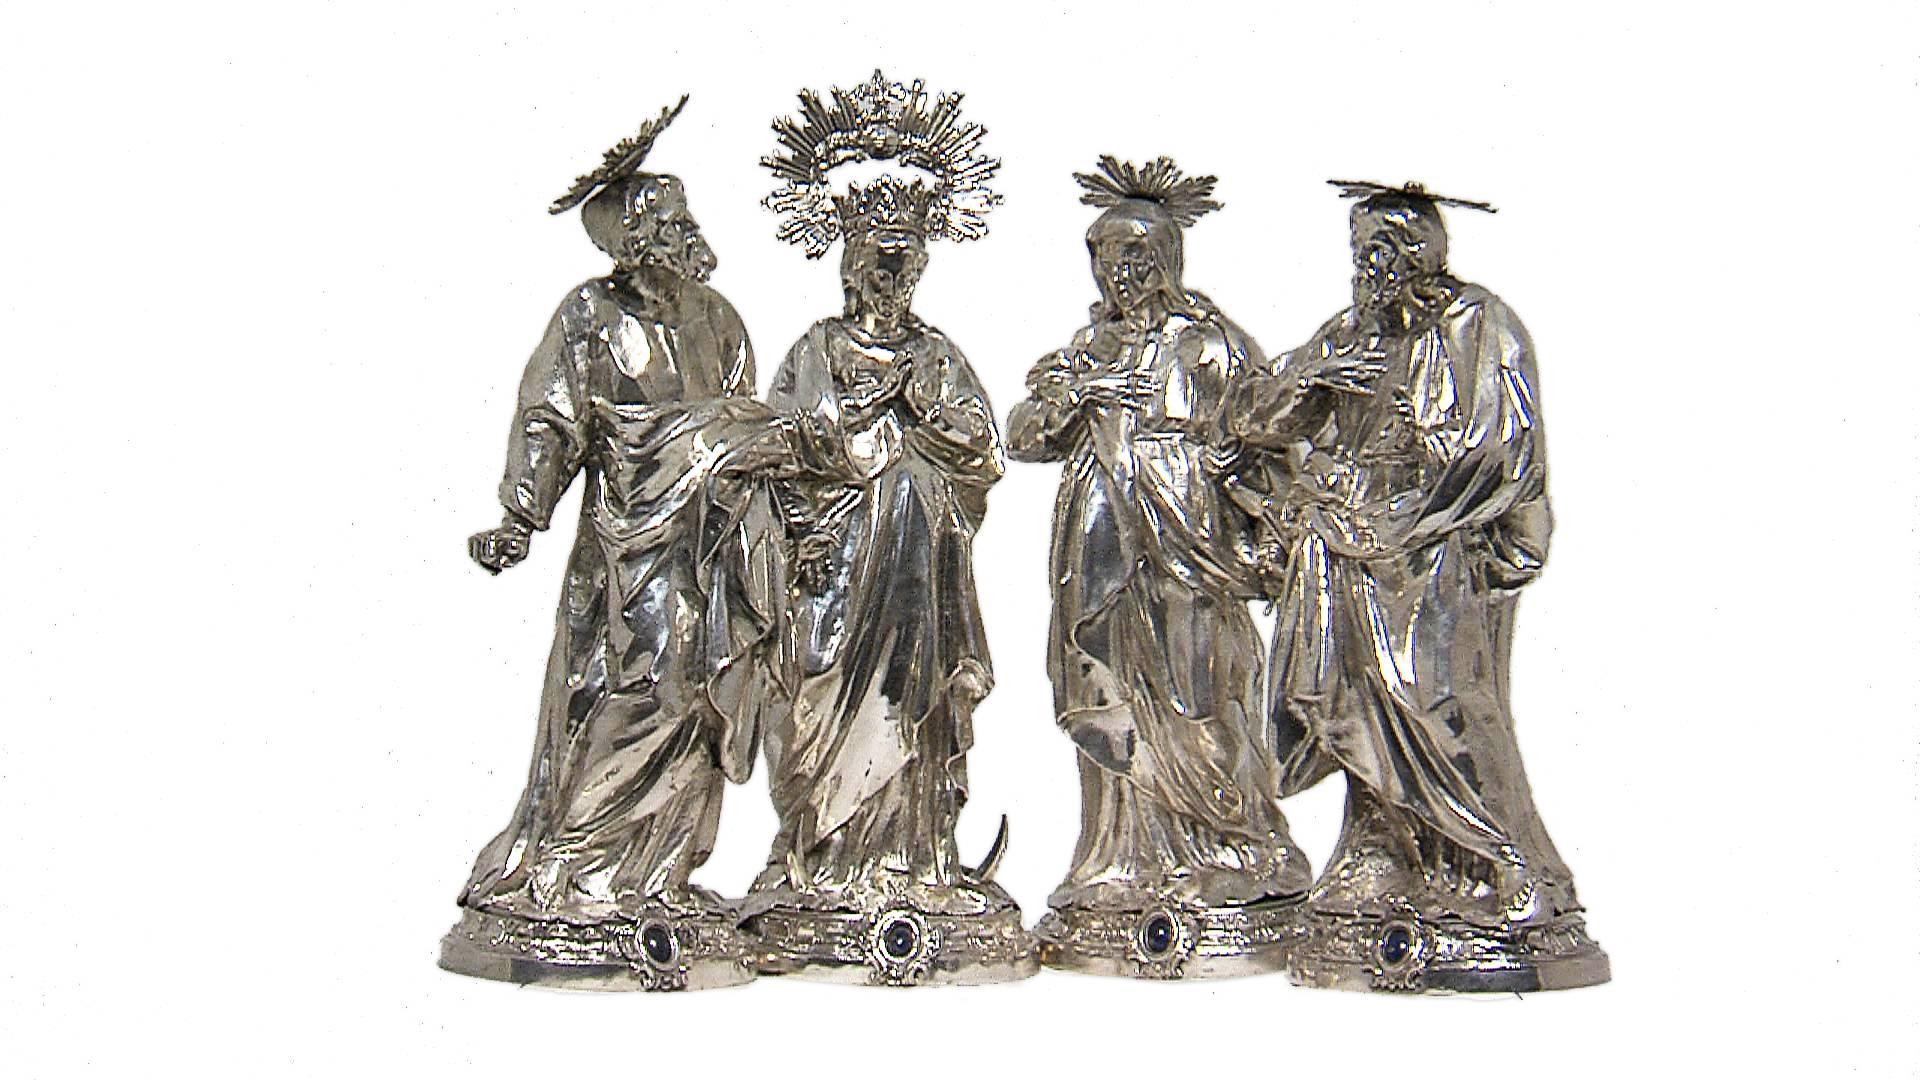 Set of Religious Figures in Repoussé Silver by Bartolomeo Borroni, Rome, 1750 For Sale 4